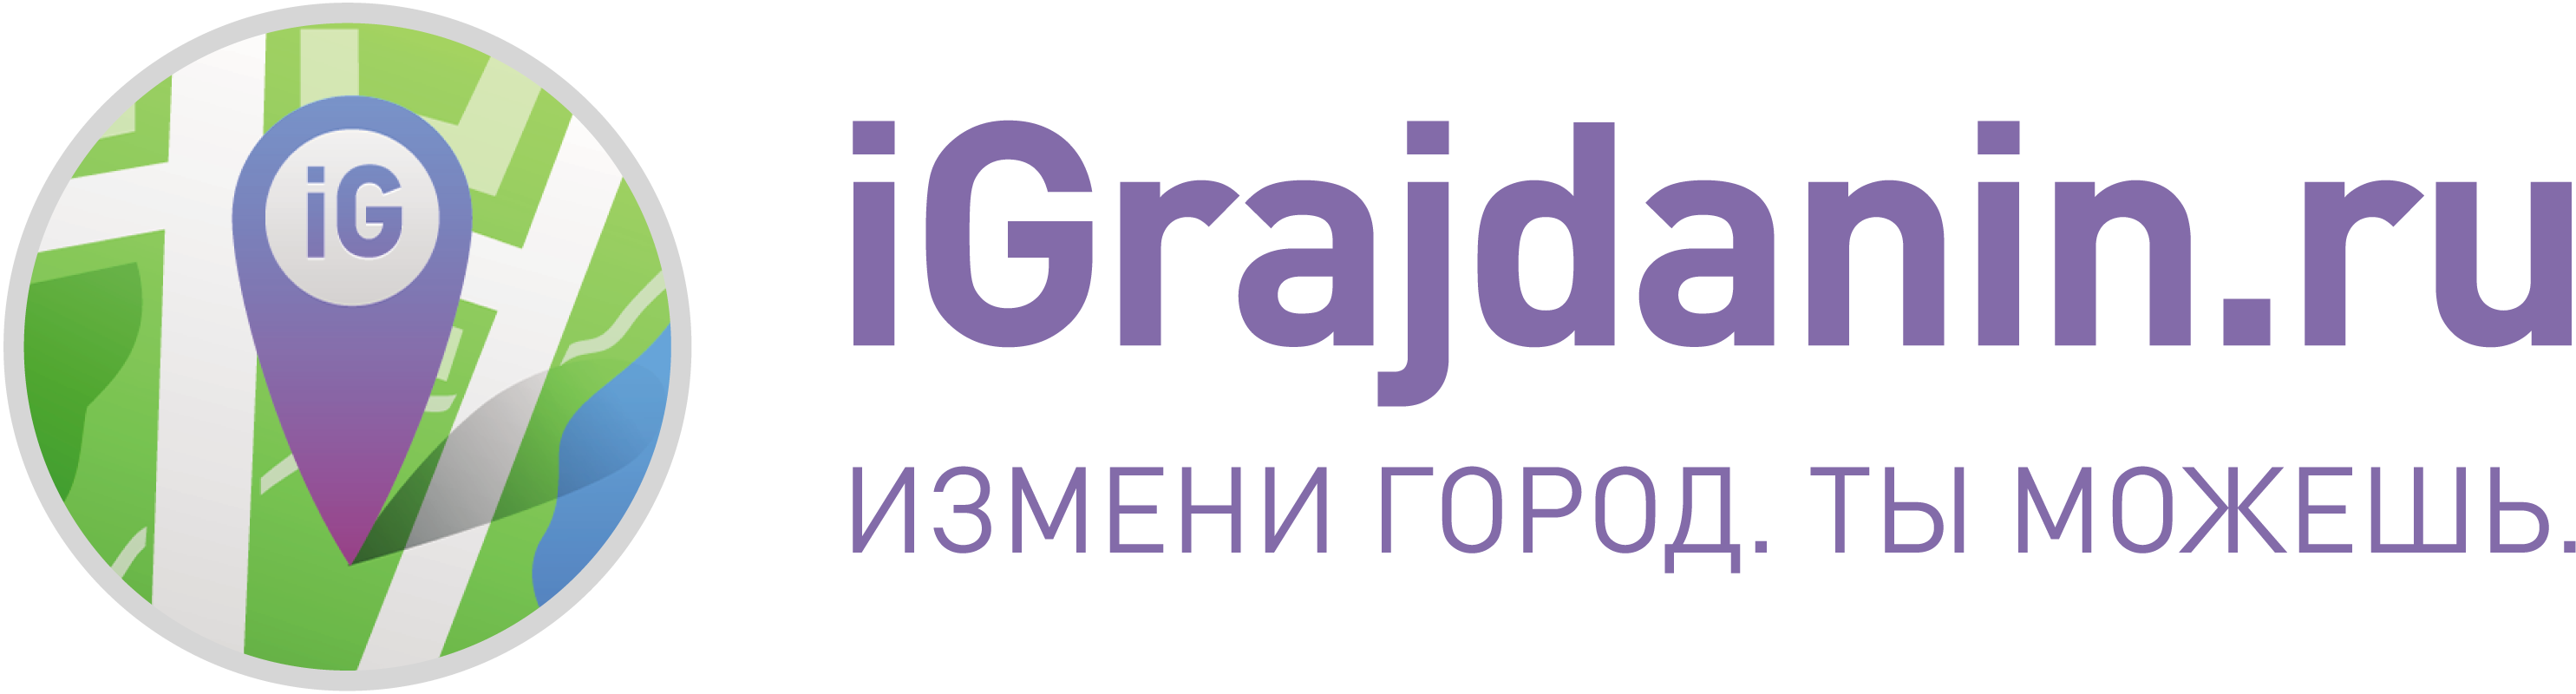 Платформа iGrajdanin.ru